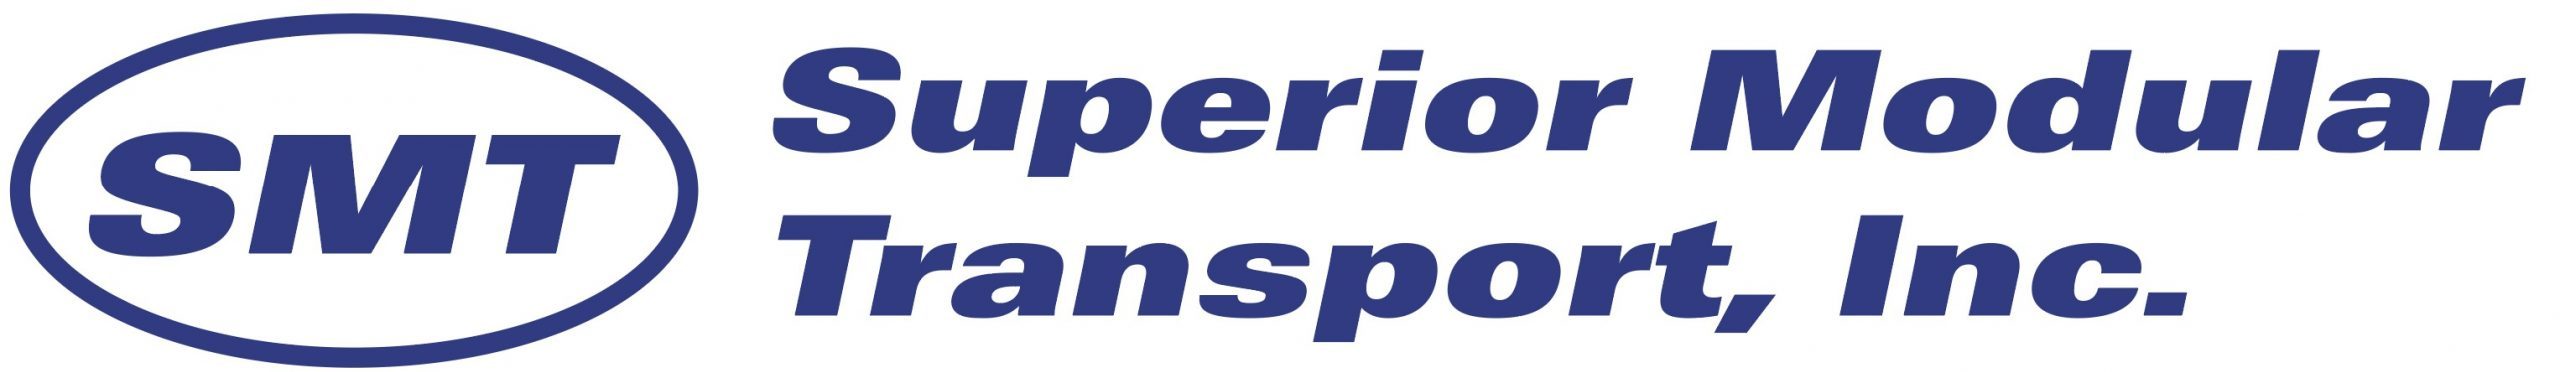 Superior Modular Transport, Inc.